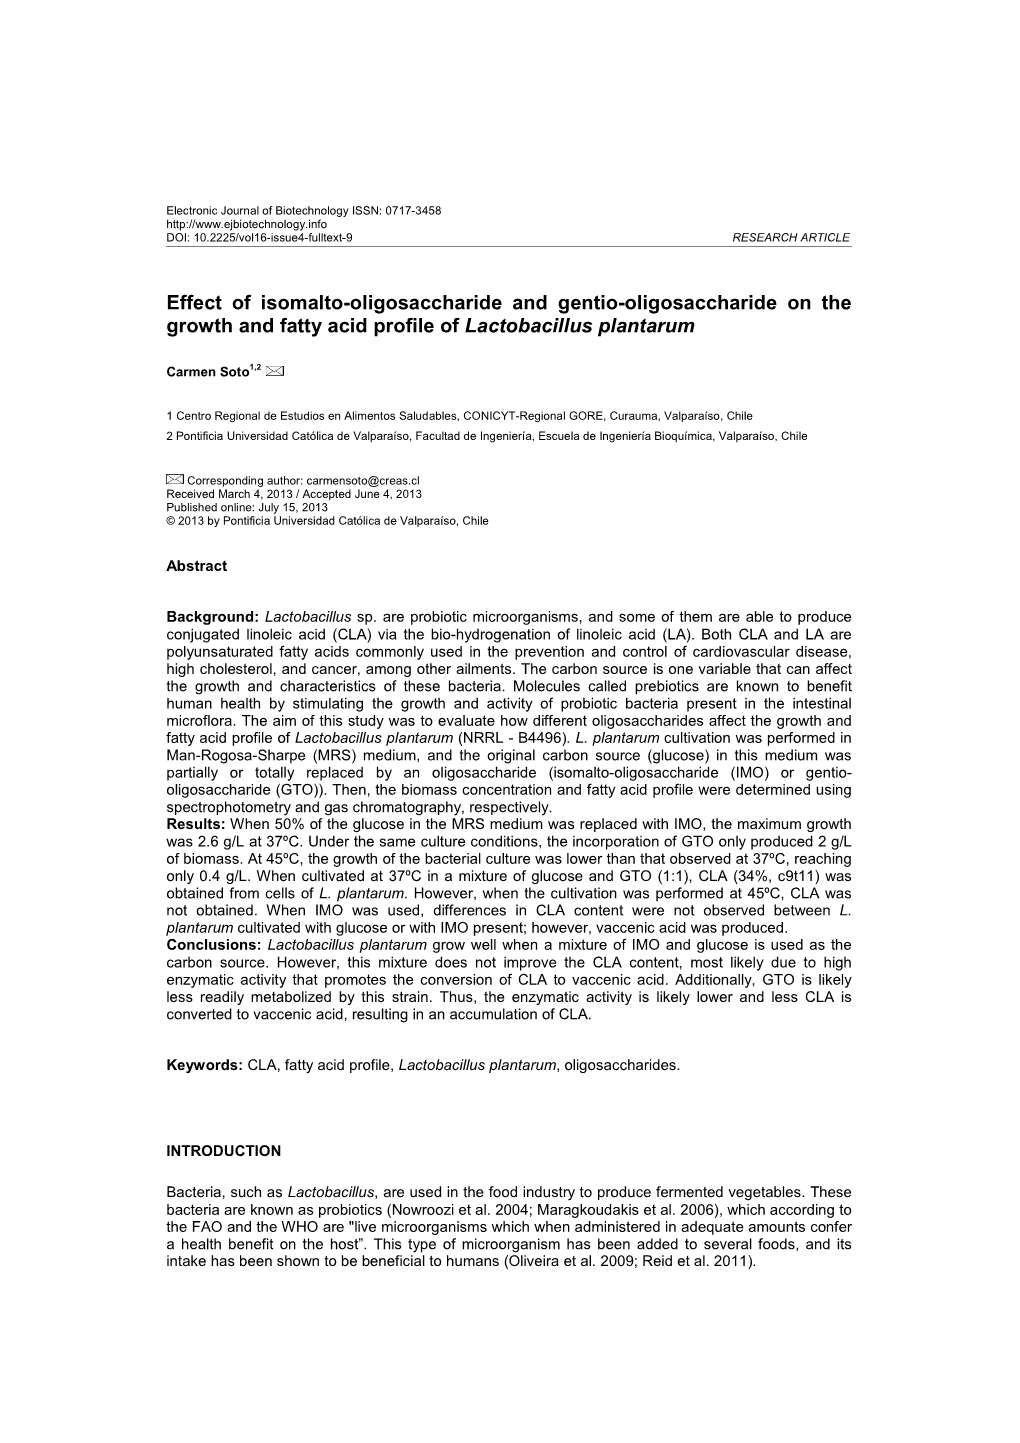 Effect of Isomalto-Oligosaccharide and Gentio-Oligosaccharide on the Growth and Fatty Acid Profile of Lactobacillus Plantarum